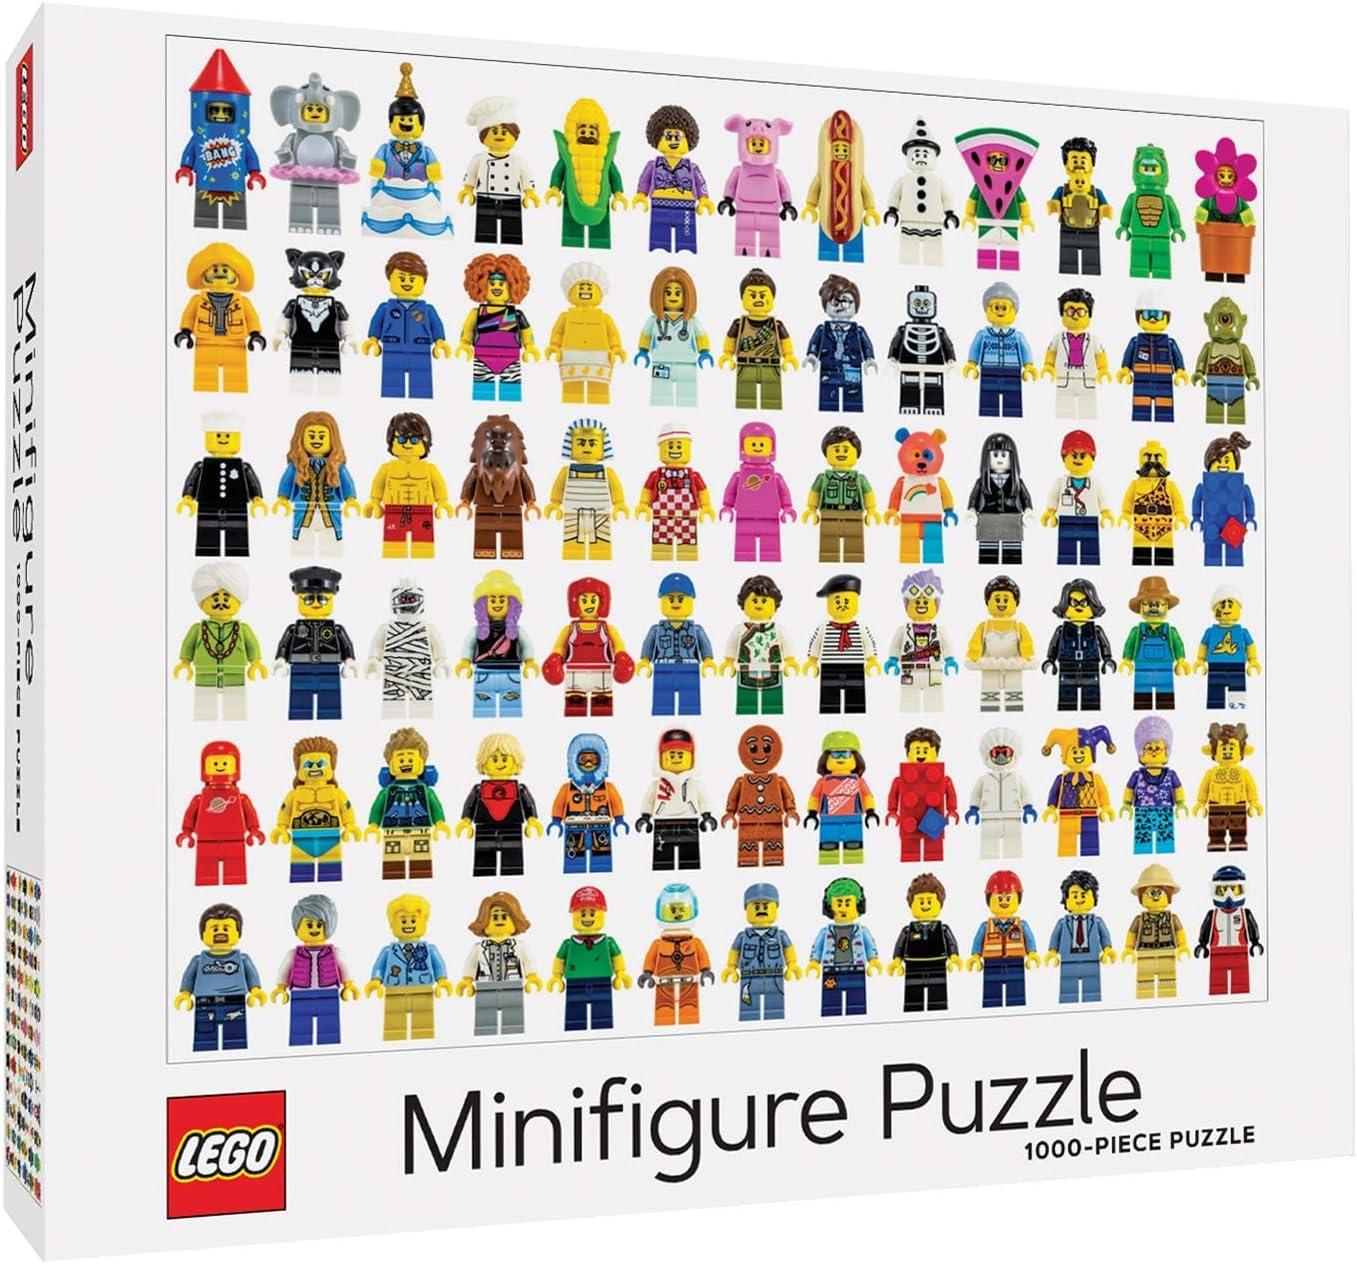 LEGO Minifigure 1000-Piece Puzzle for $7.49